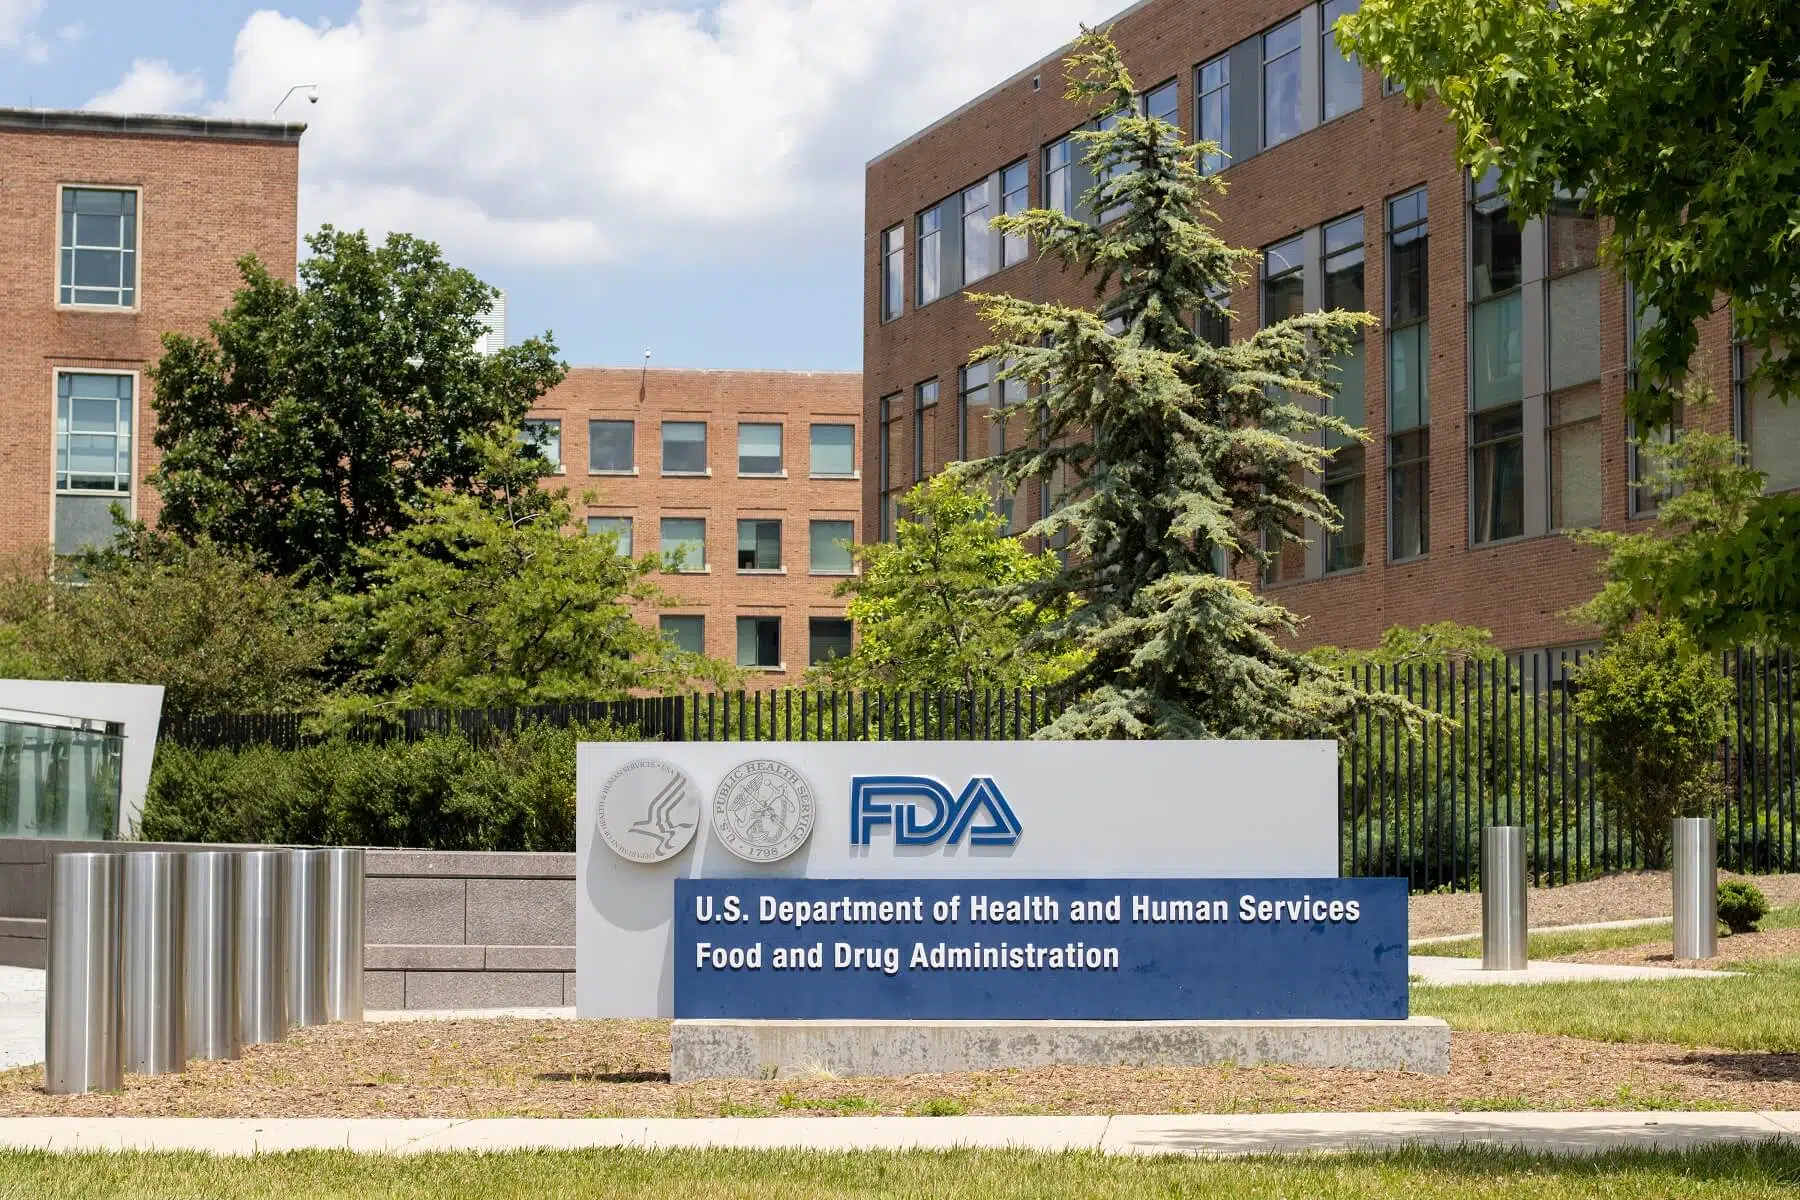 Congress unimpressed with FDA response to CBD bill